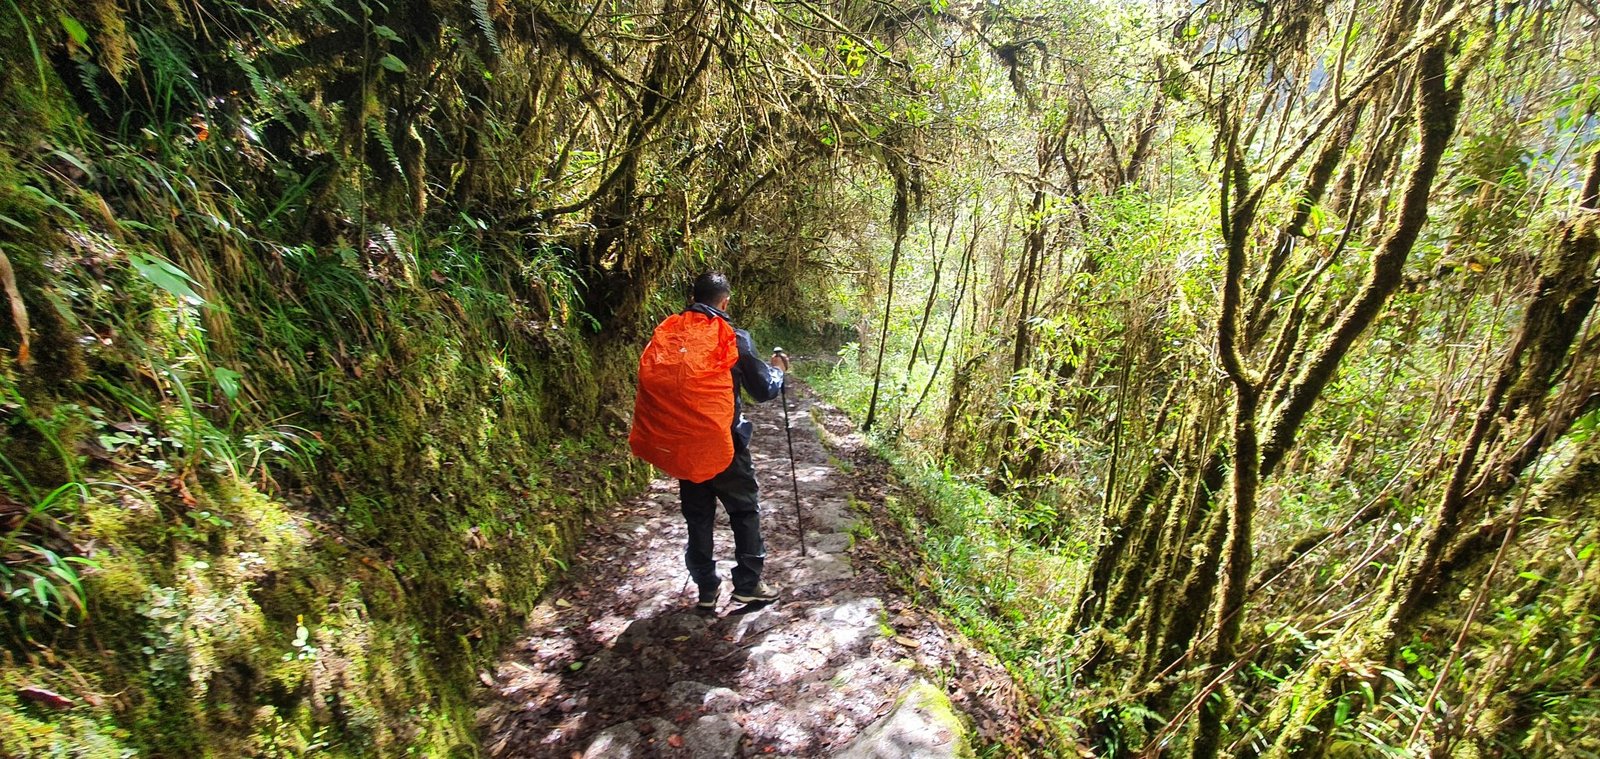 Inca Trail to Machu Picchu 4 daysPhoto #3 